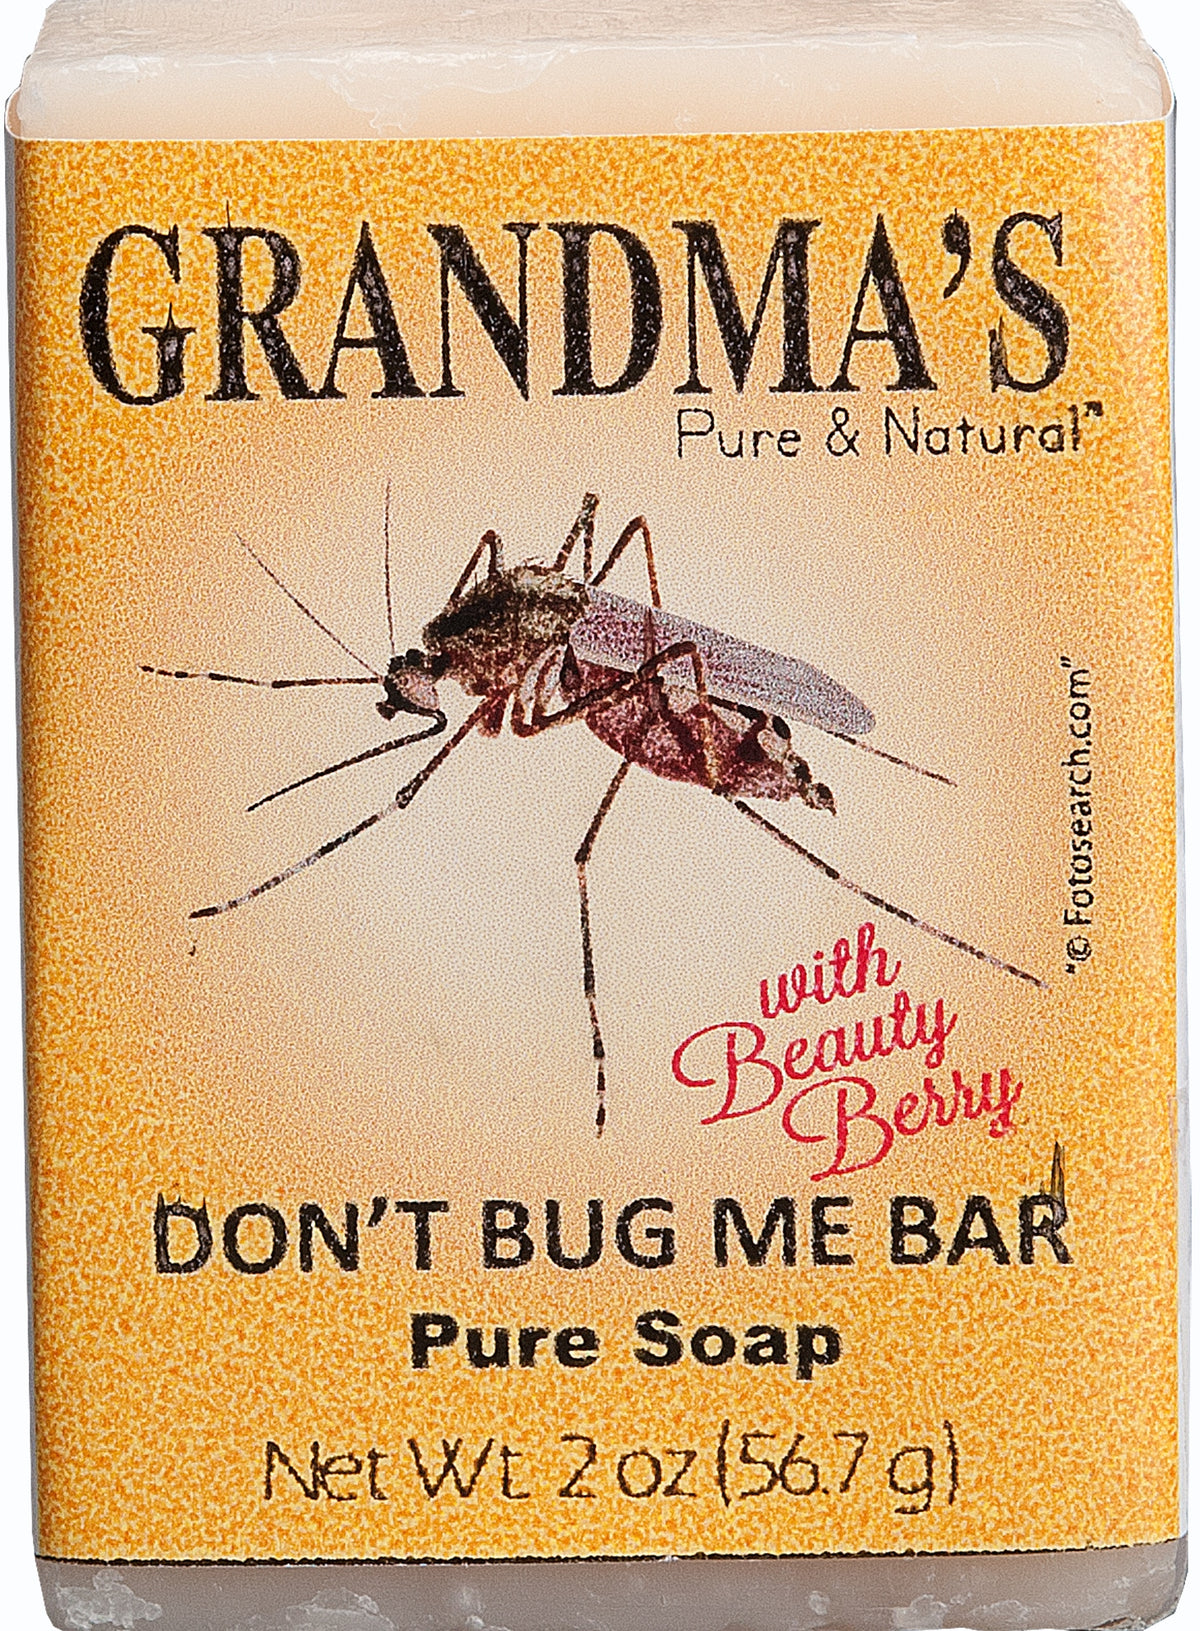 Grandma's 67023 Don't Bug Me Bar Pure Soap, 2 Oz